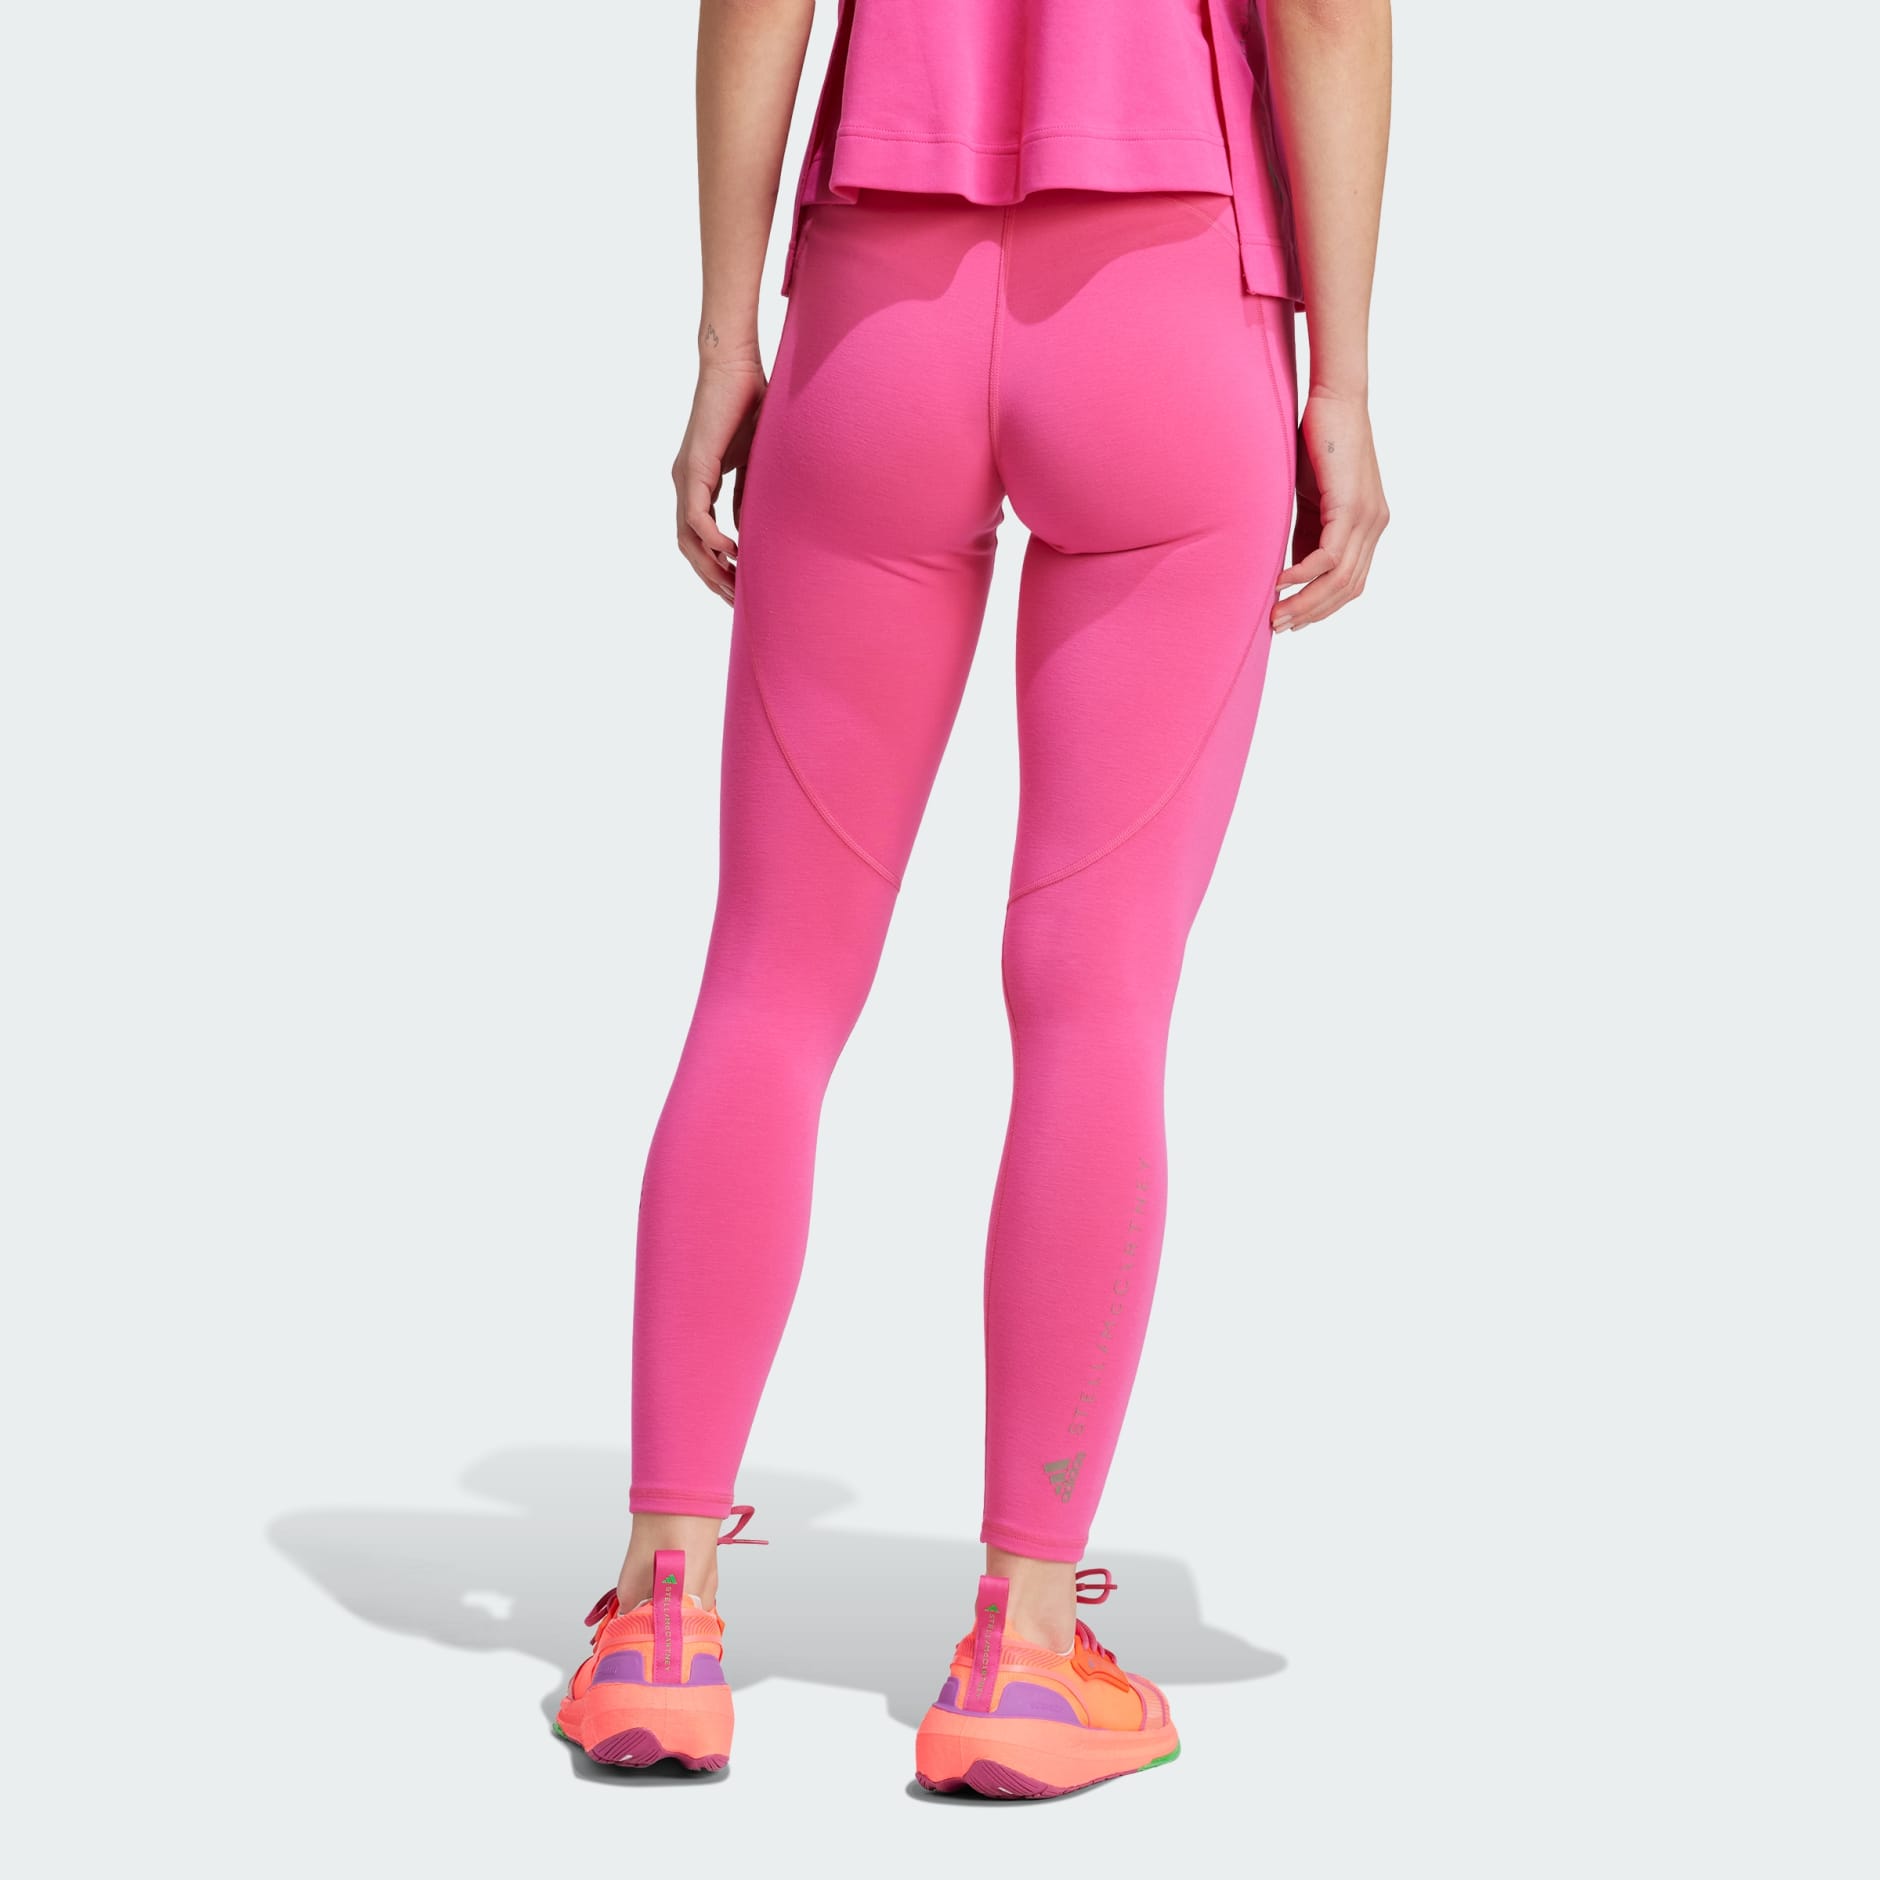 Women's Clothing - adidas by Stella McCartney 7/8 Yoga Leggings